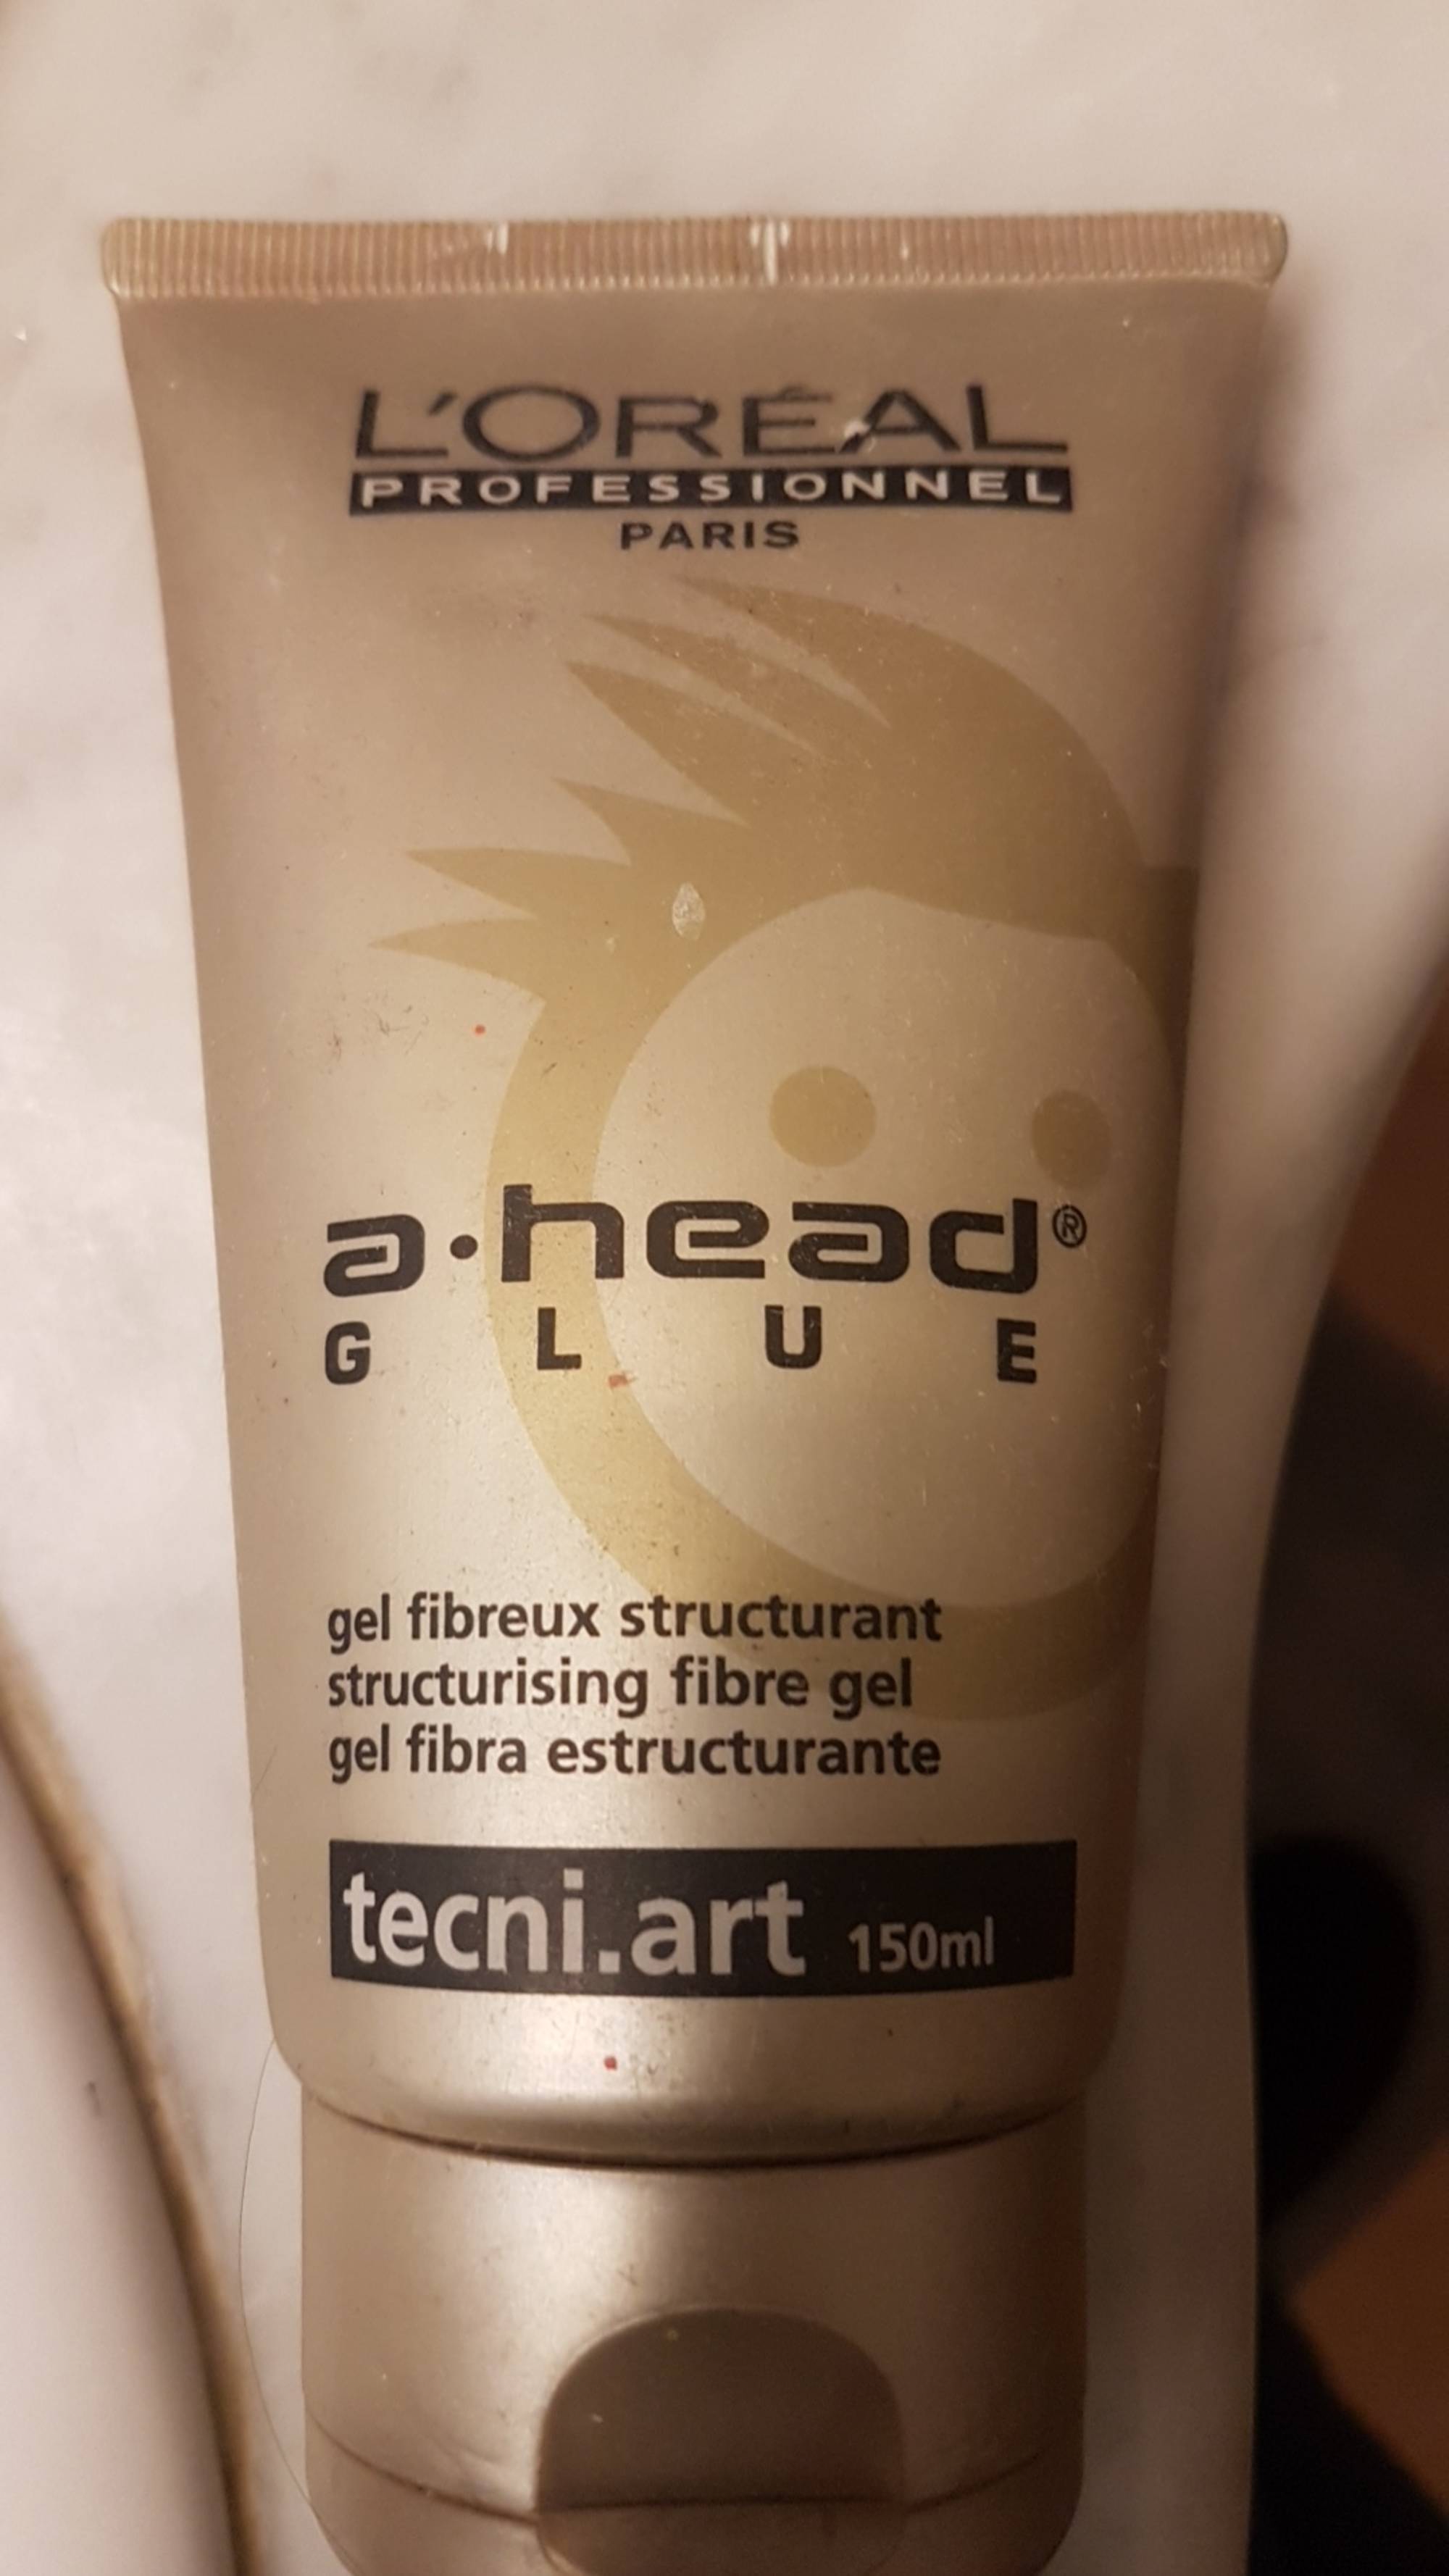 L'ORÉAL PROFESSIONNEL - Tecni Art - A.head glue - Gel fibreux structurant